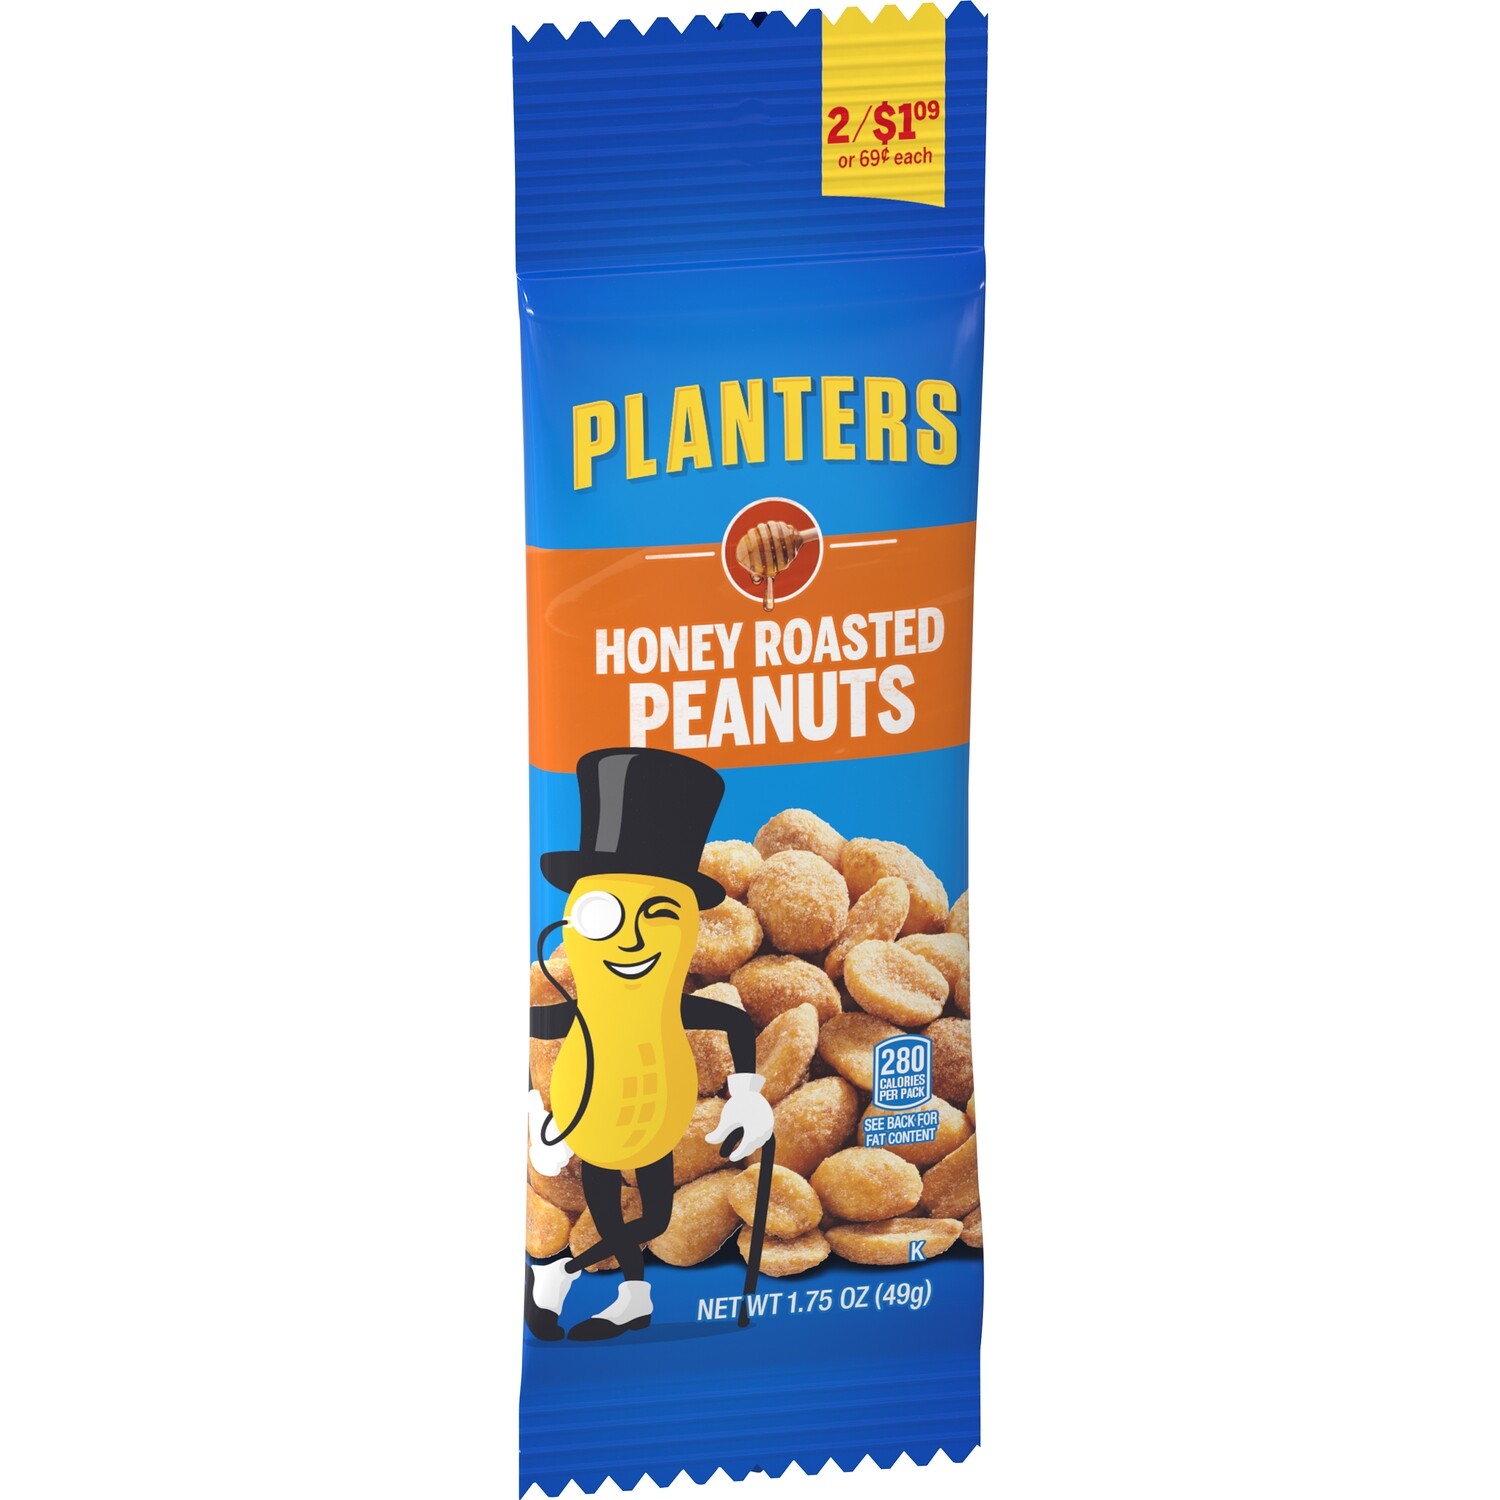 Planters Honey Roasted Peanuts 1.75oz bag